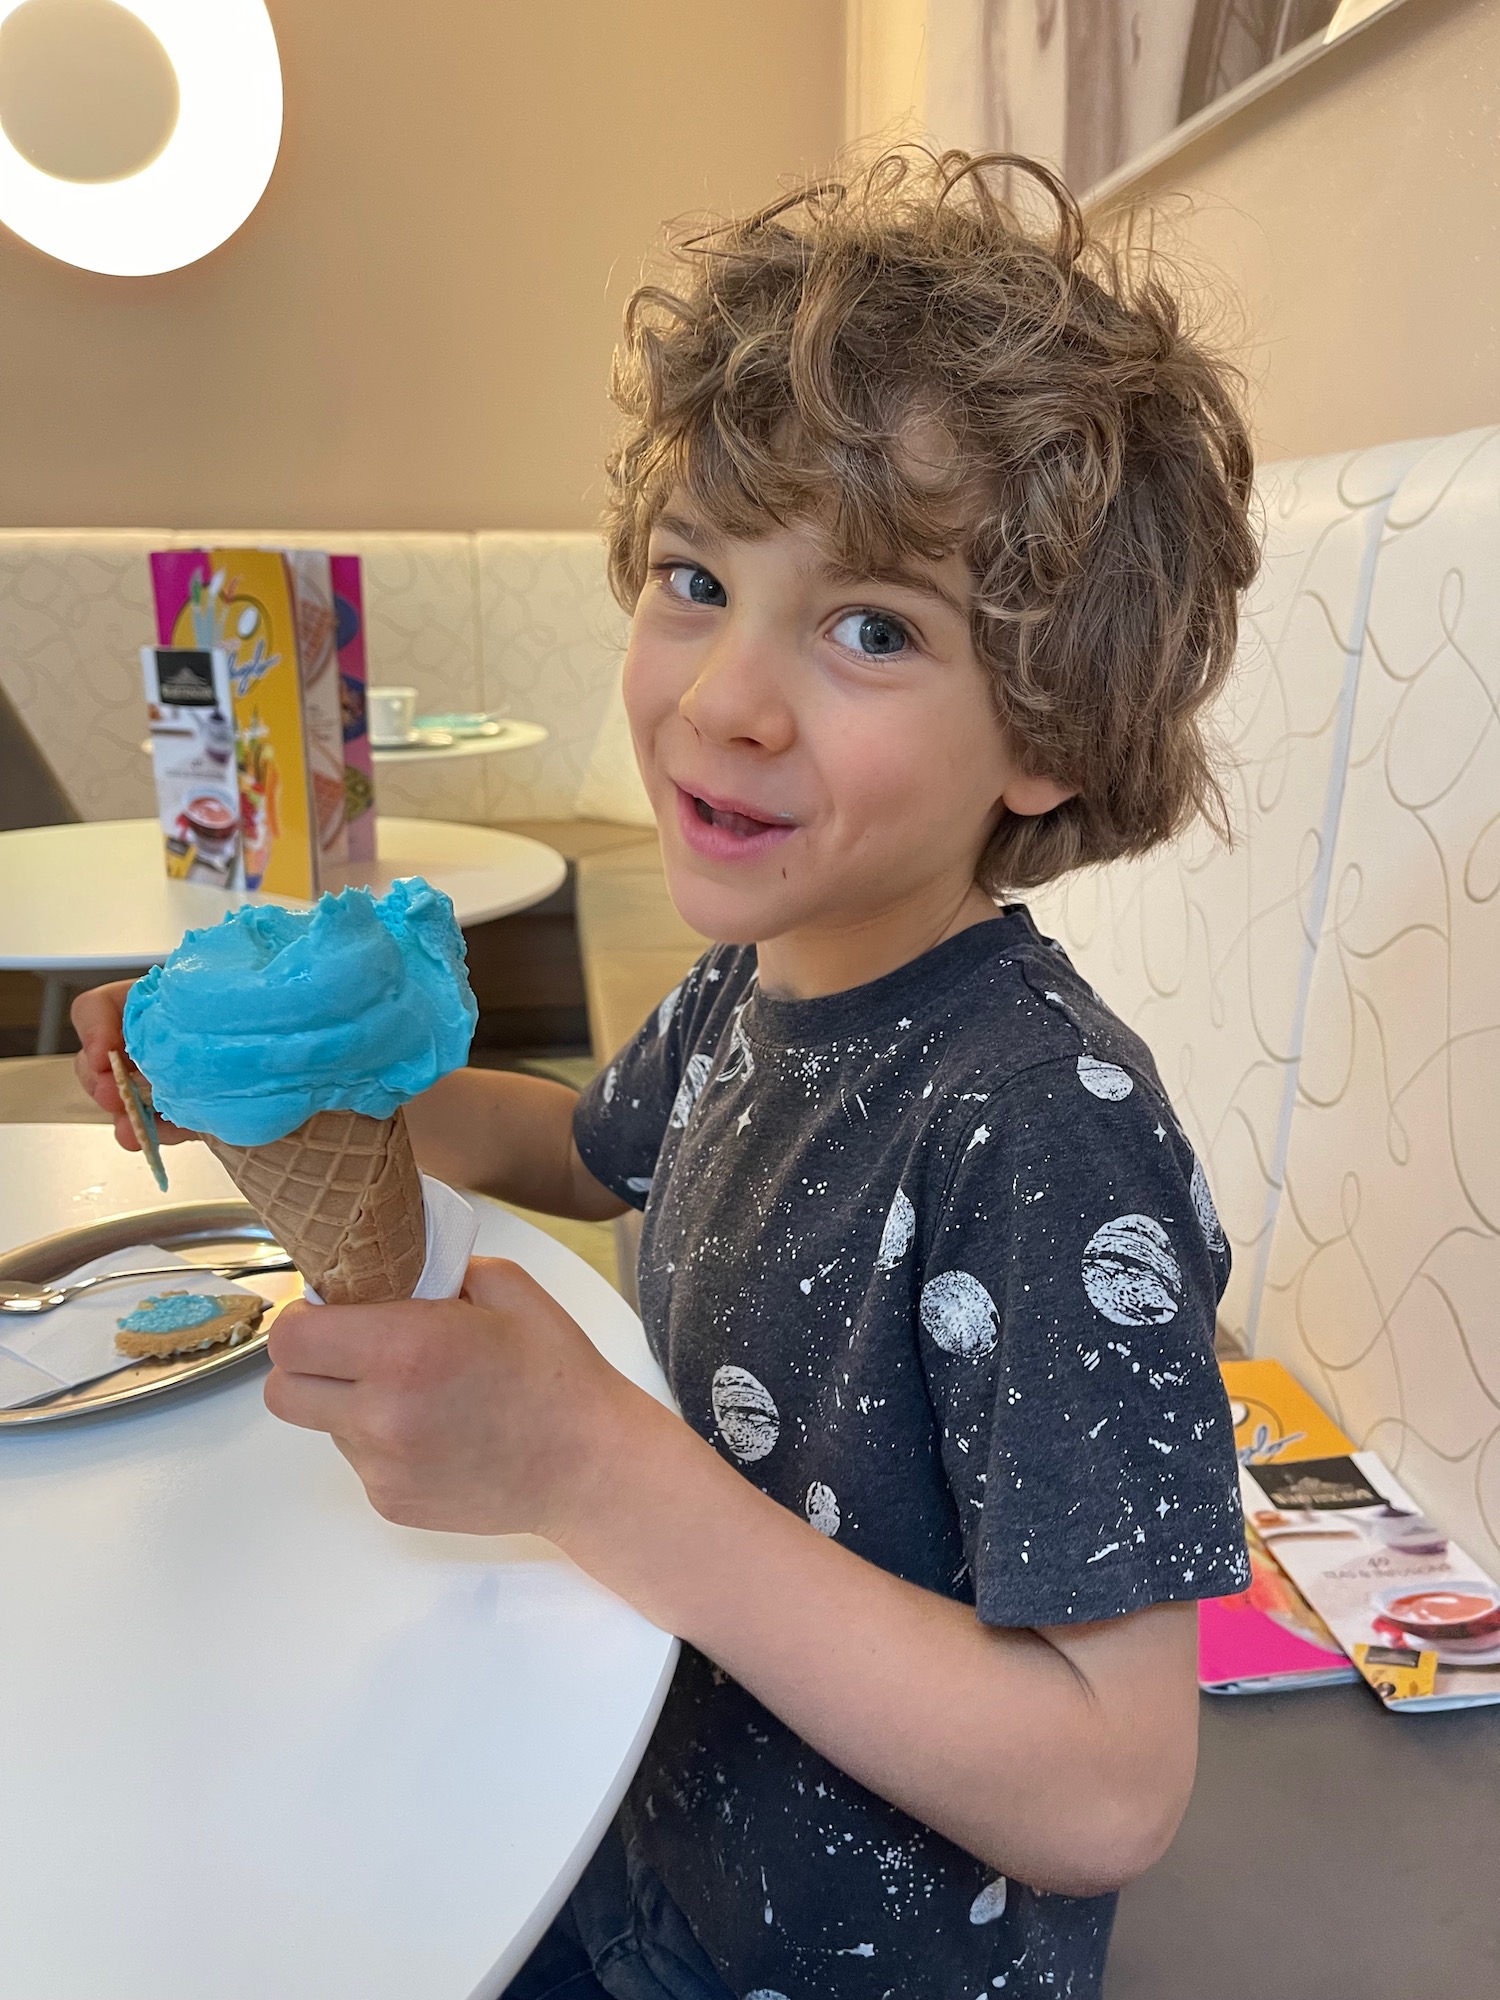 a boy holding an ice cream cone